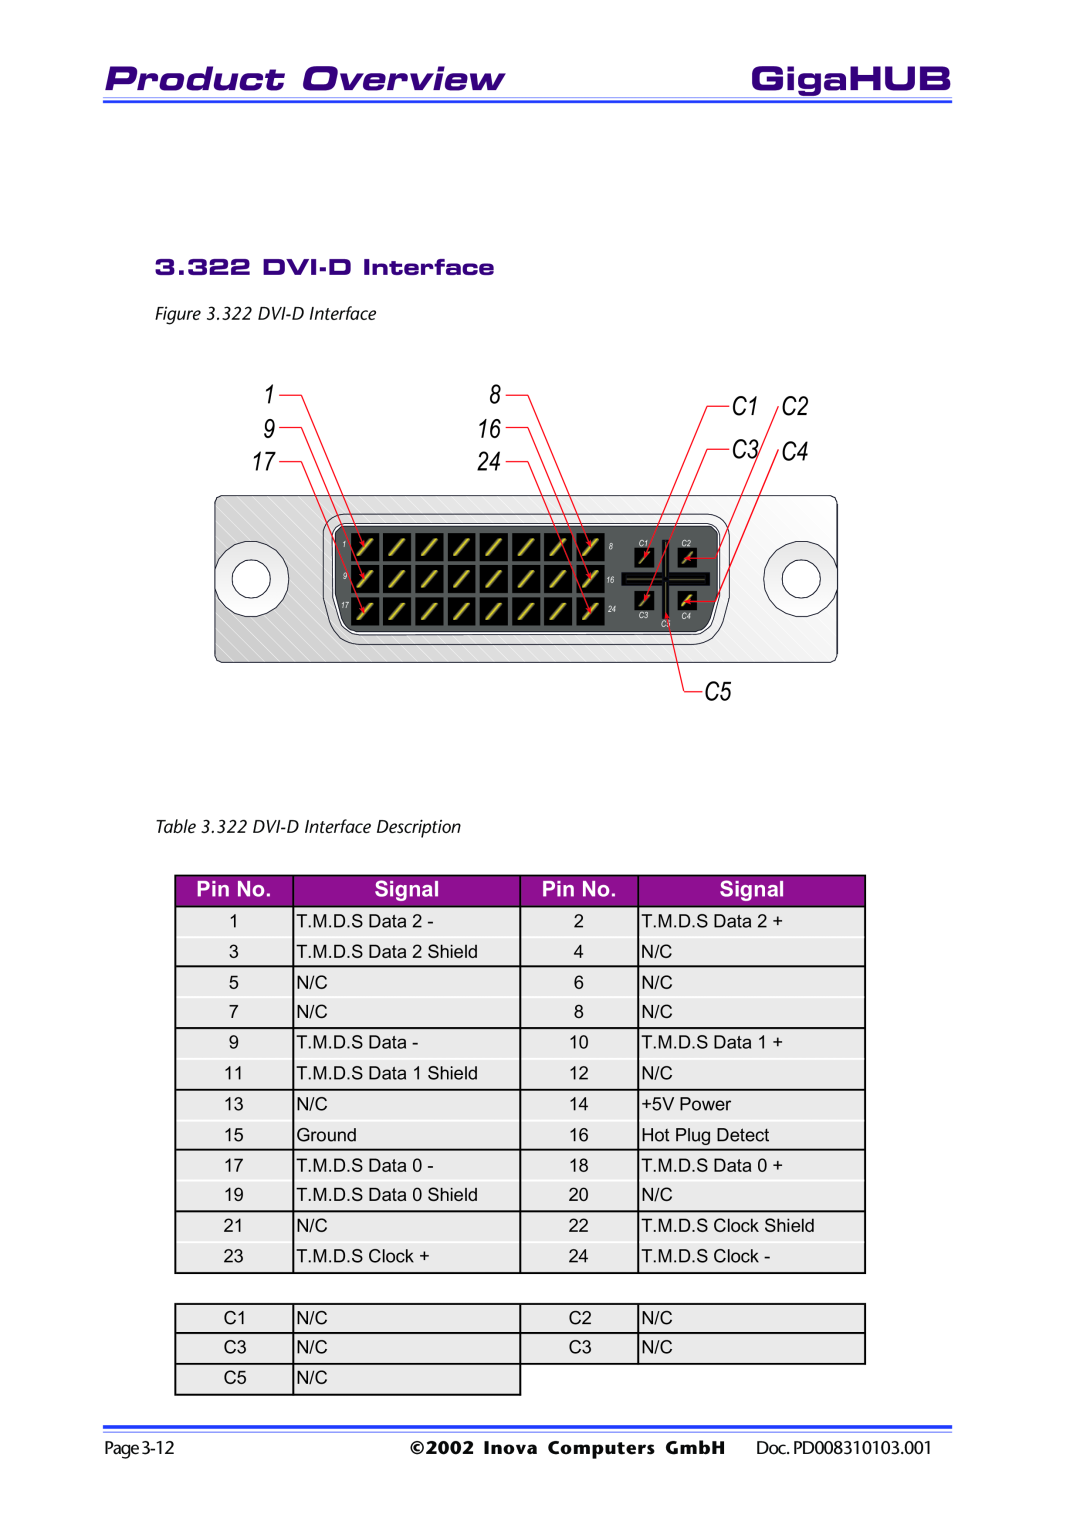 Inova PD008310103.001 AB user manual Product Overview, GigaHUB, 322 DVI-D Interface Description 